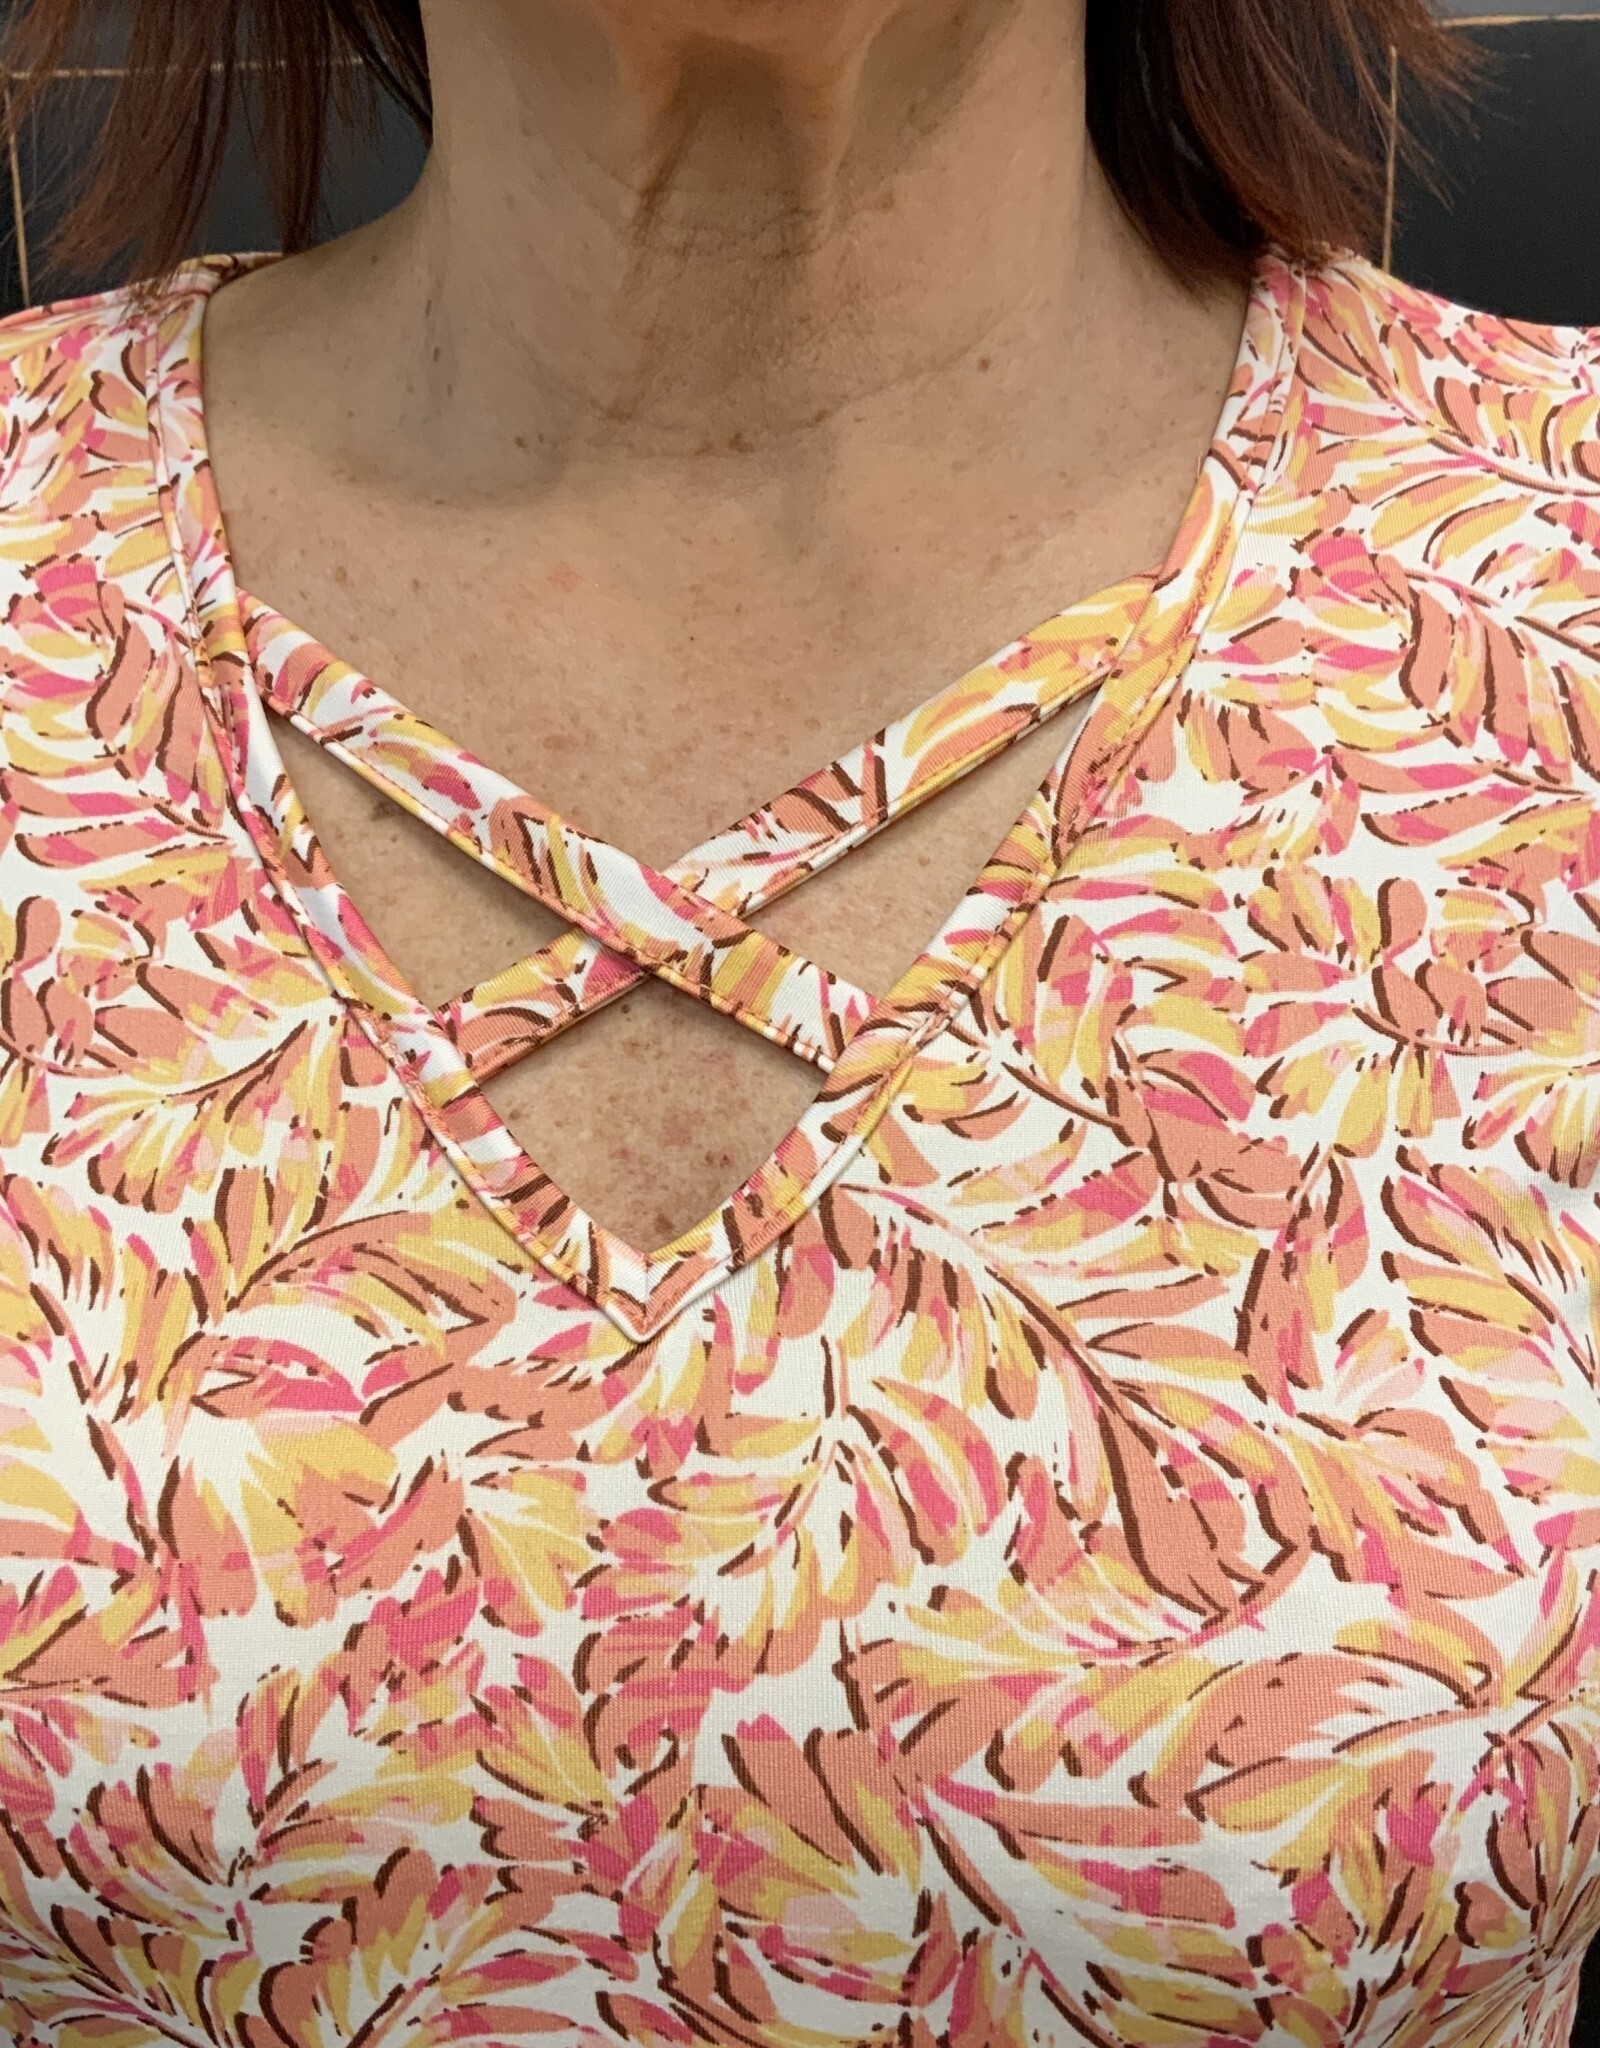 - Pink Leaf Print Criss Cross V-Neck Cap Sleeve Top